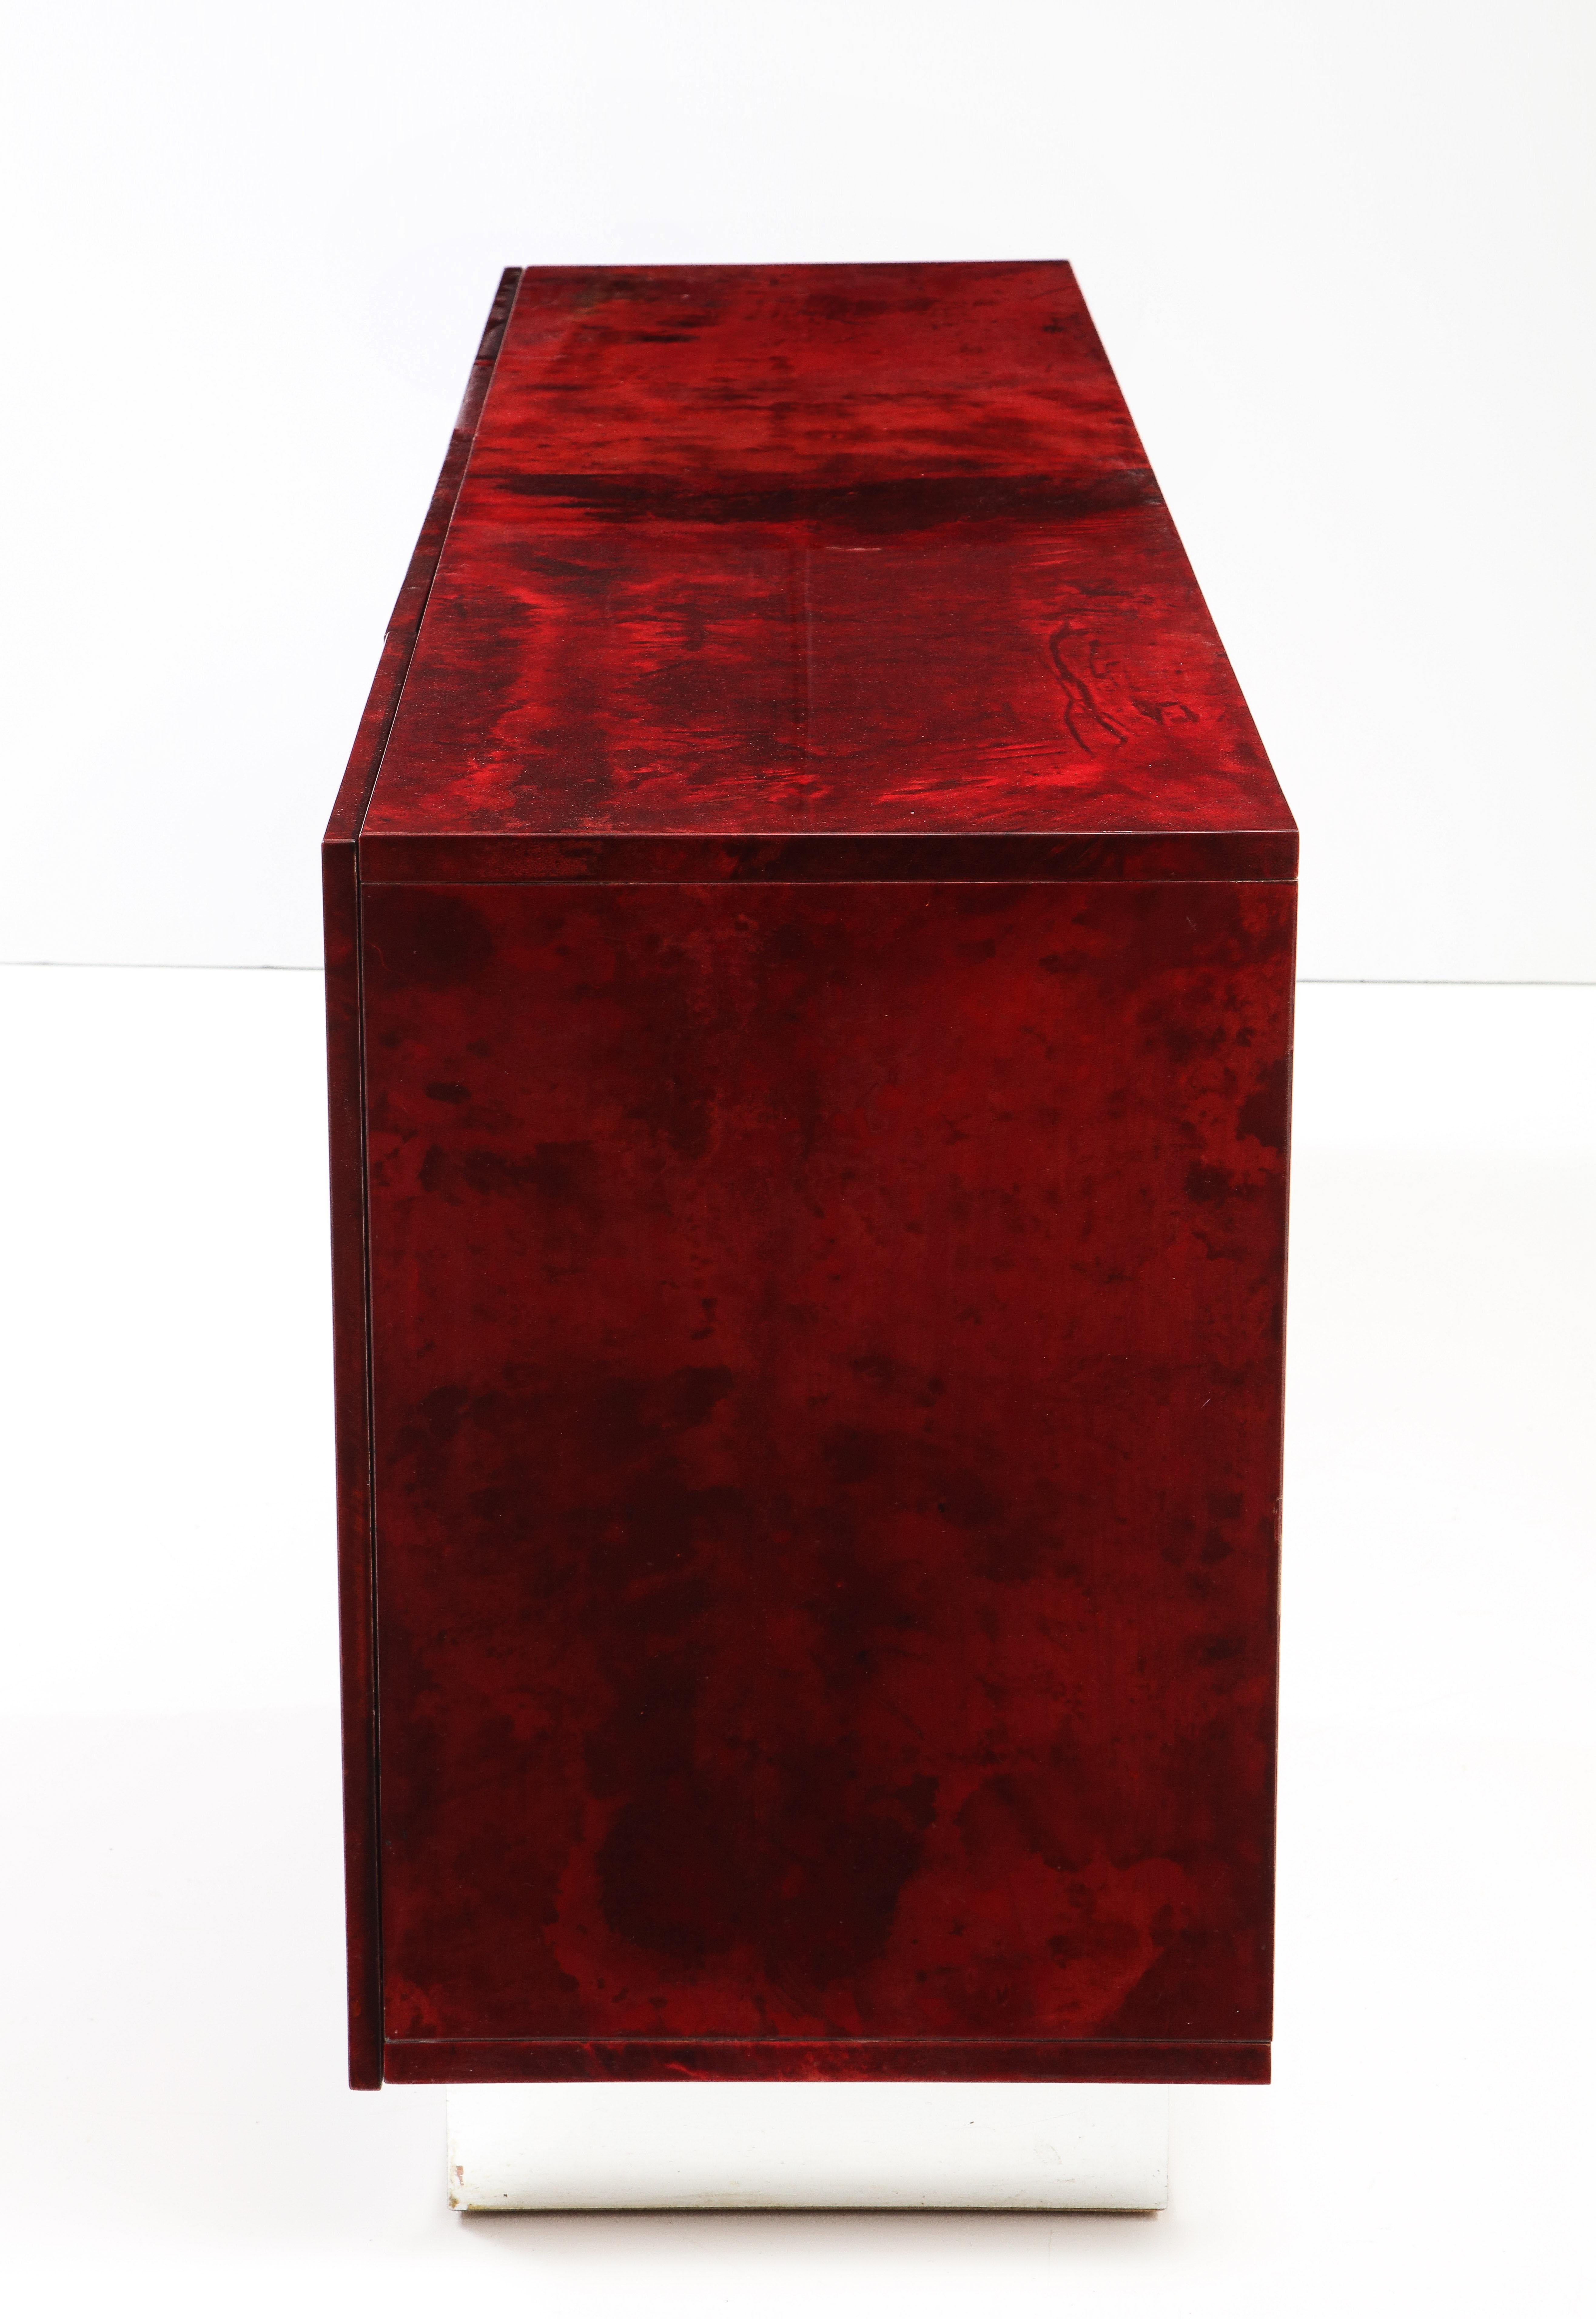 Aldo Tura Blood Red Goatskin Cabinet, Chrome Plinth Base, Italy, 1960 For Sale 5